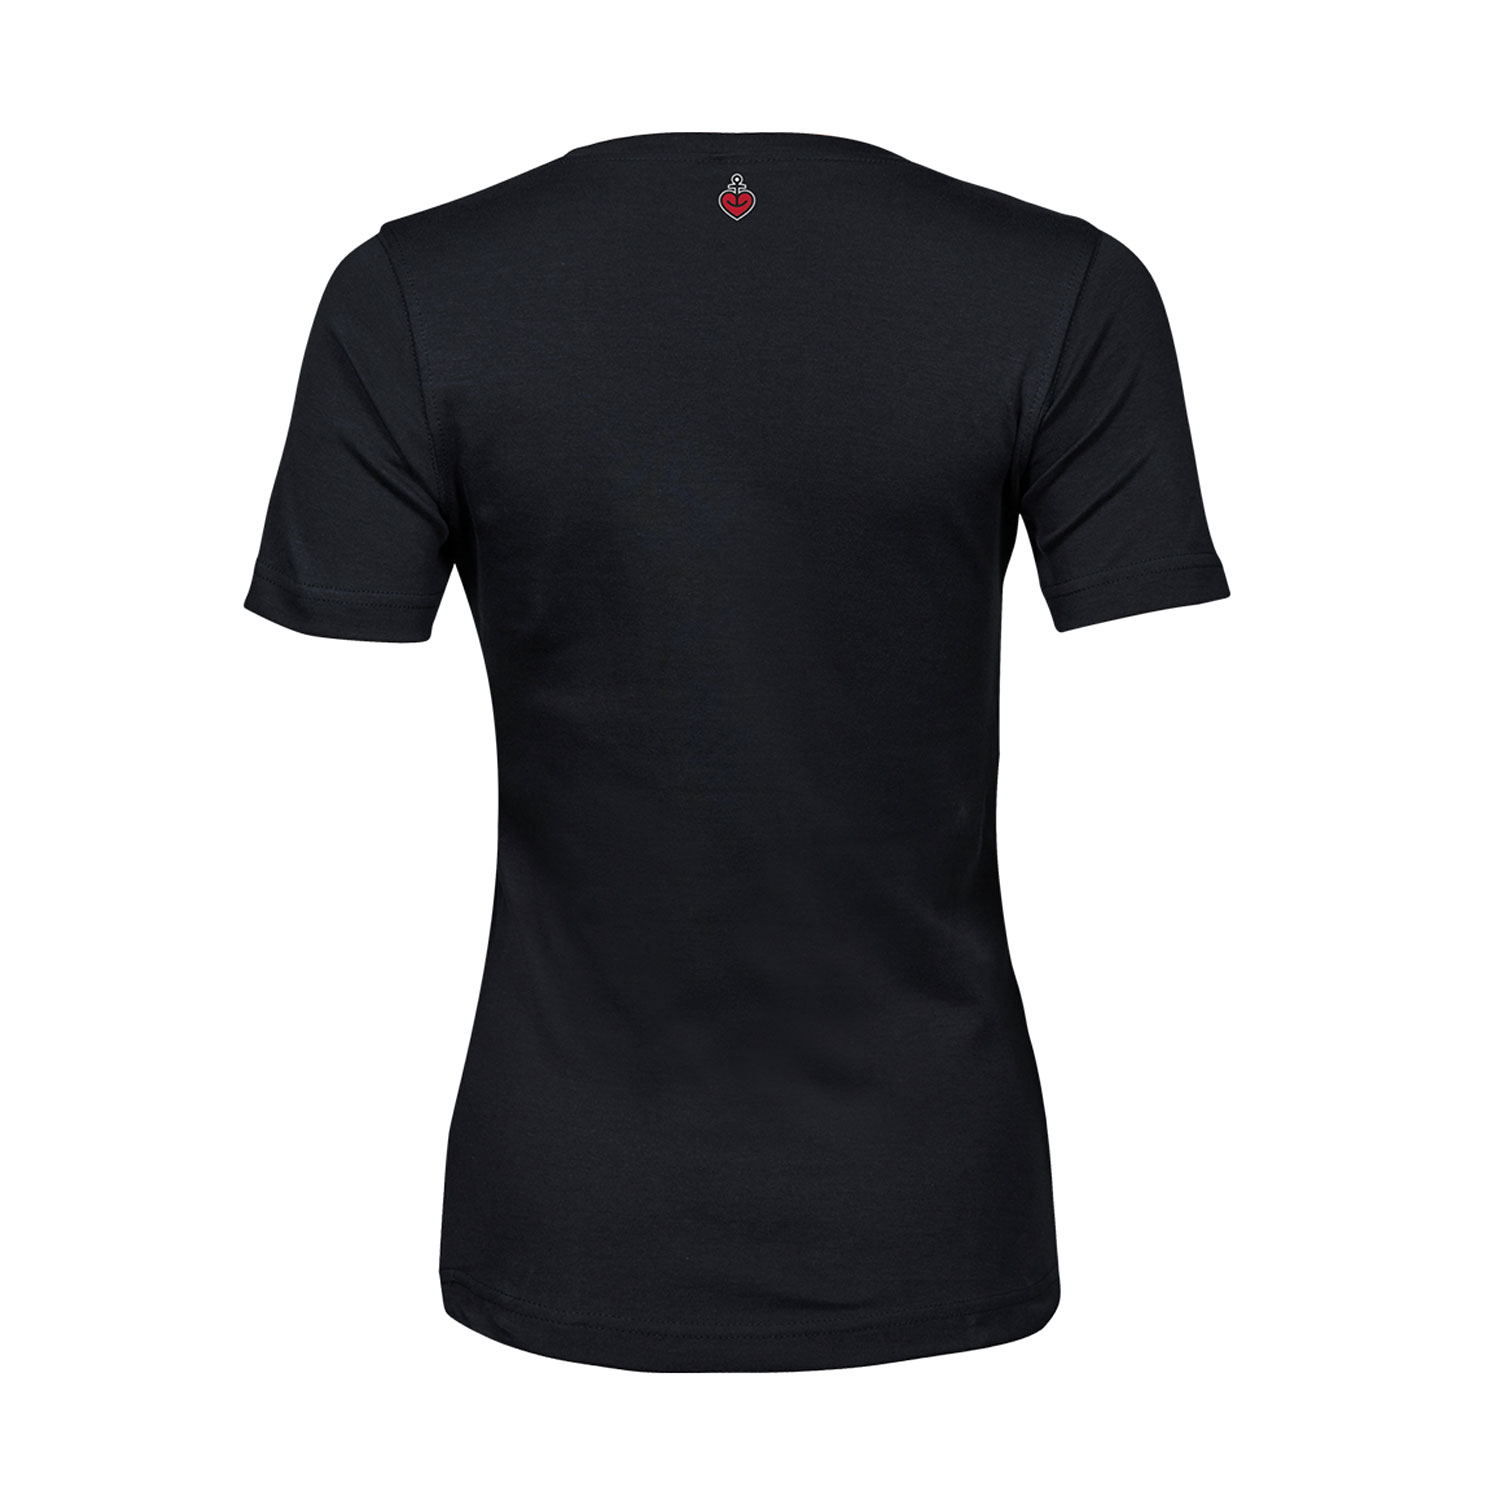 Damen T-Shirt „Astra St. Pauli-Brauerei“, schwarz